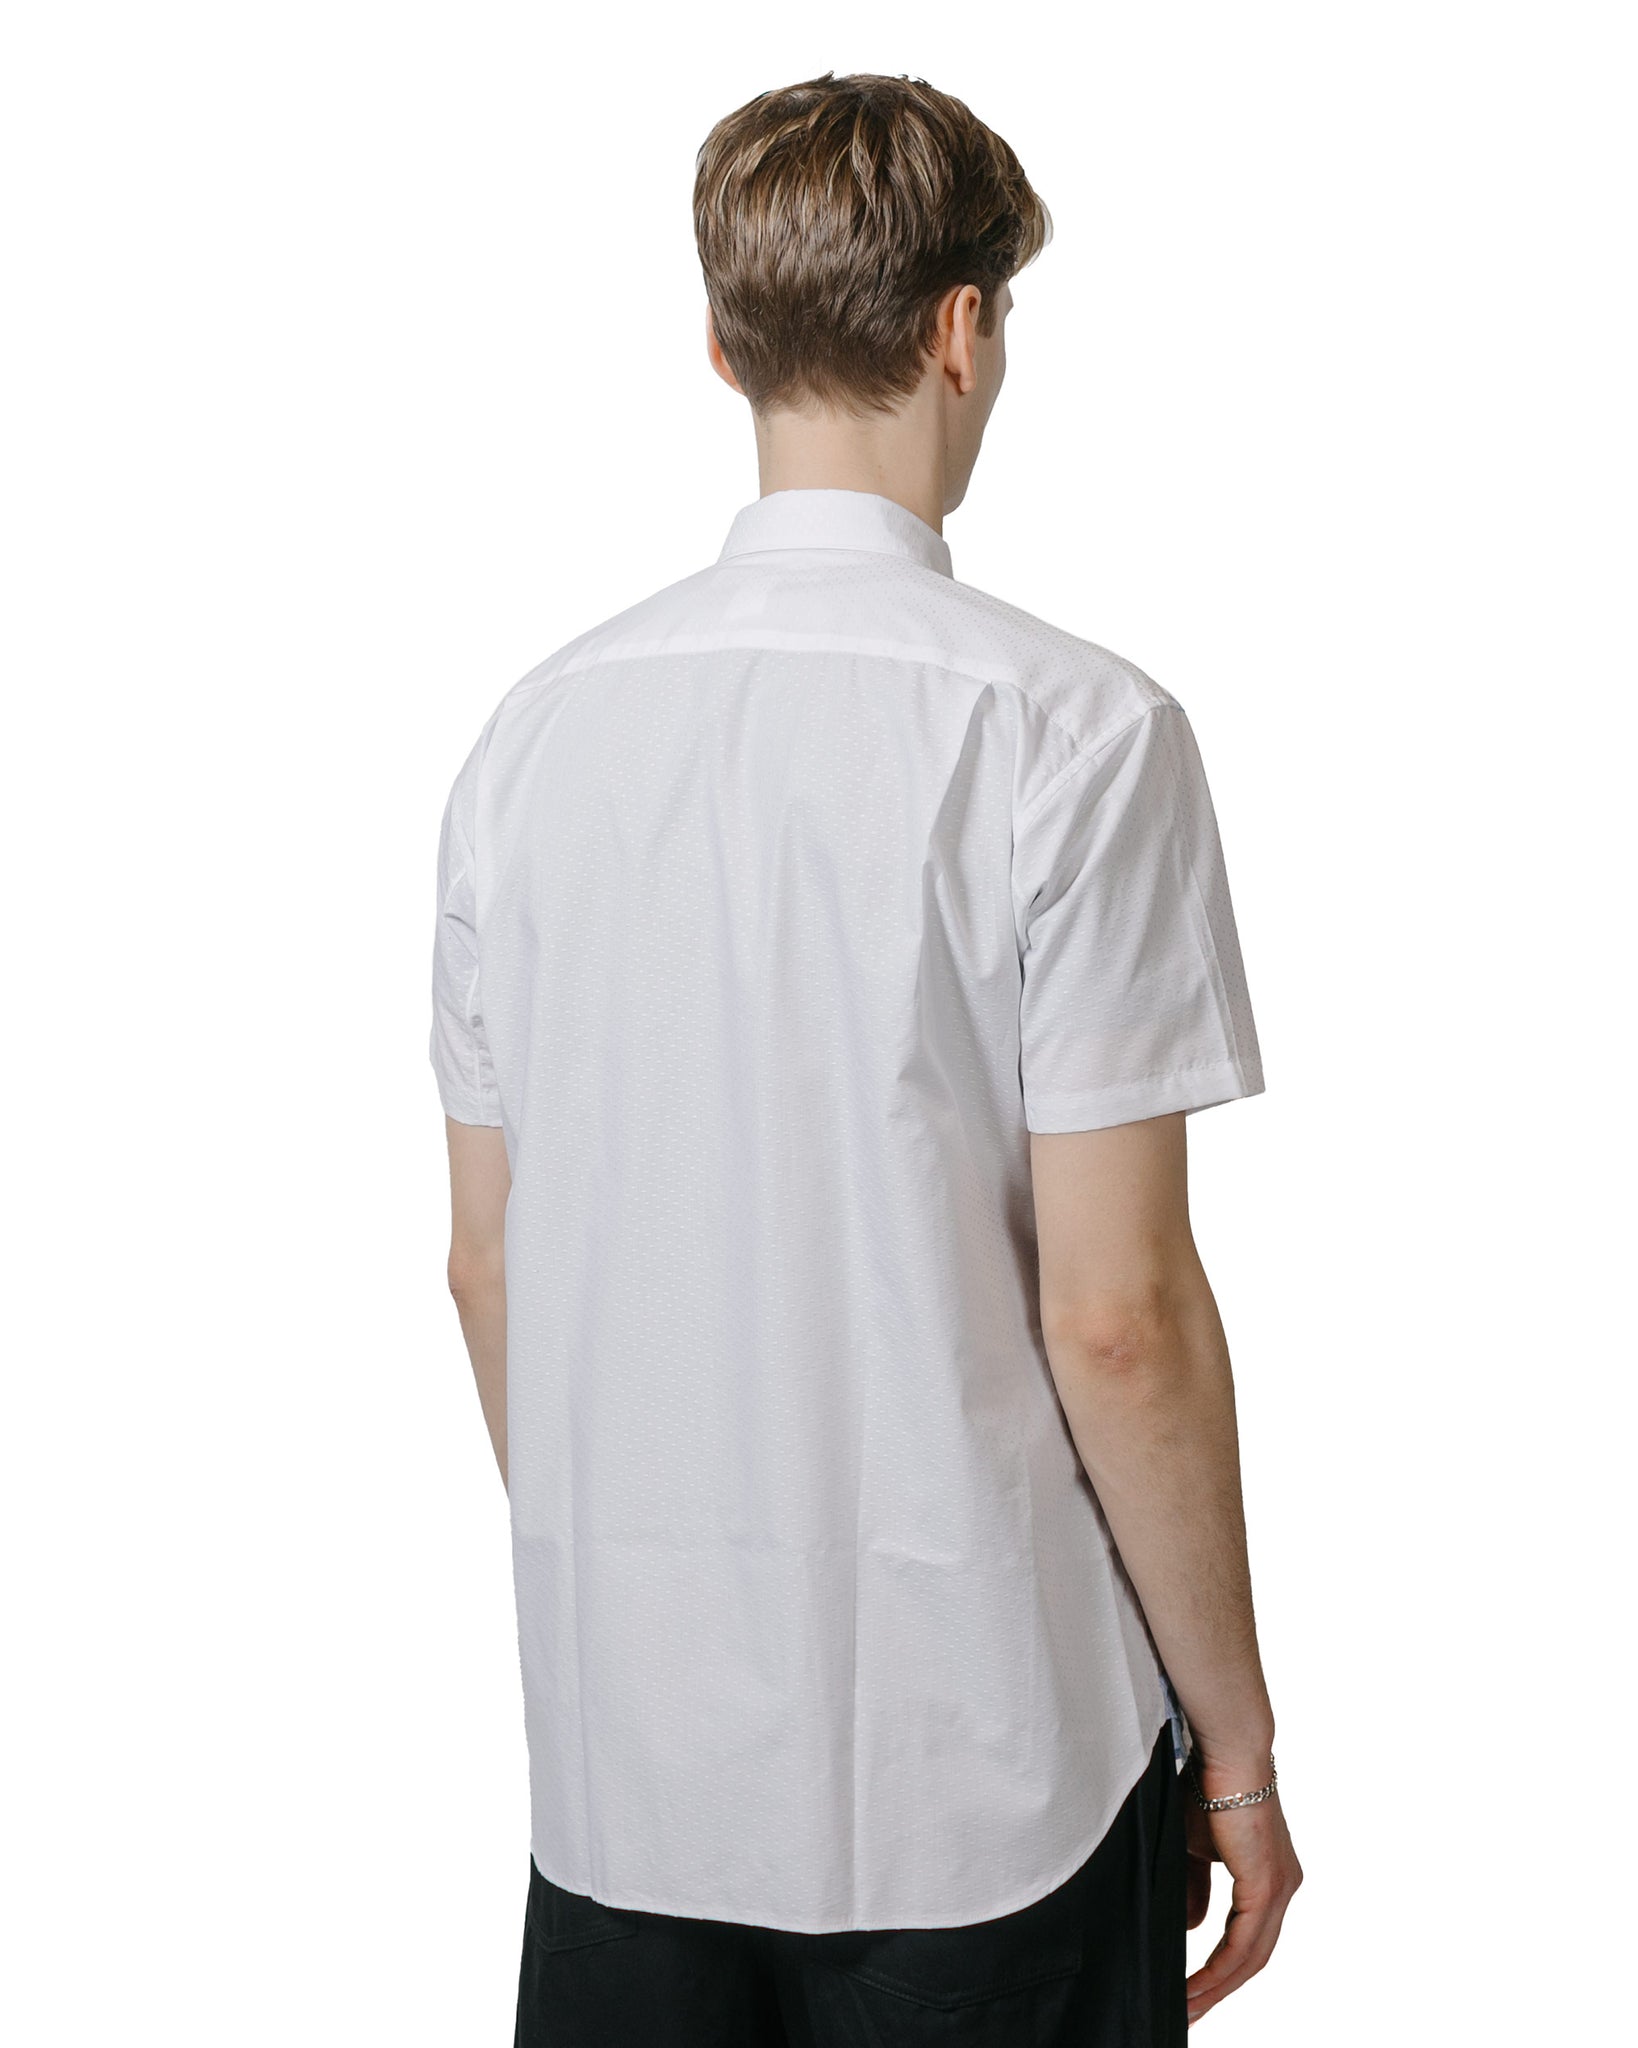 Comme des Garçons SHIRT Patchwork Check Shirt WhiteBlue model back